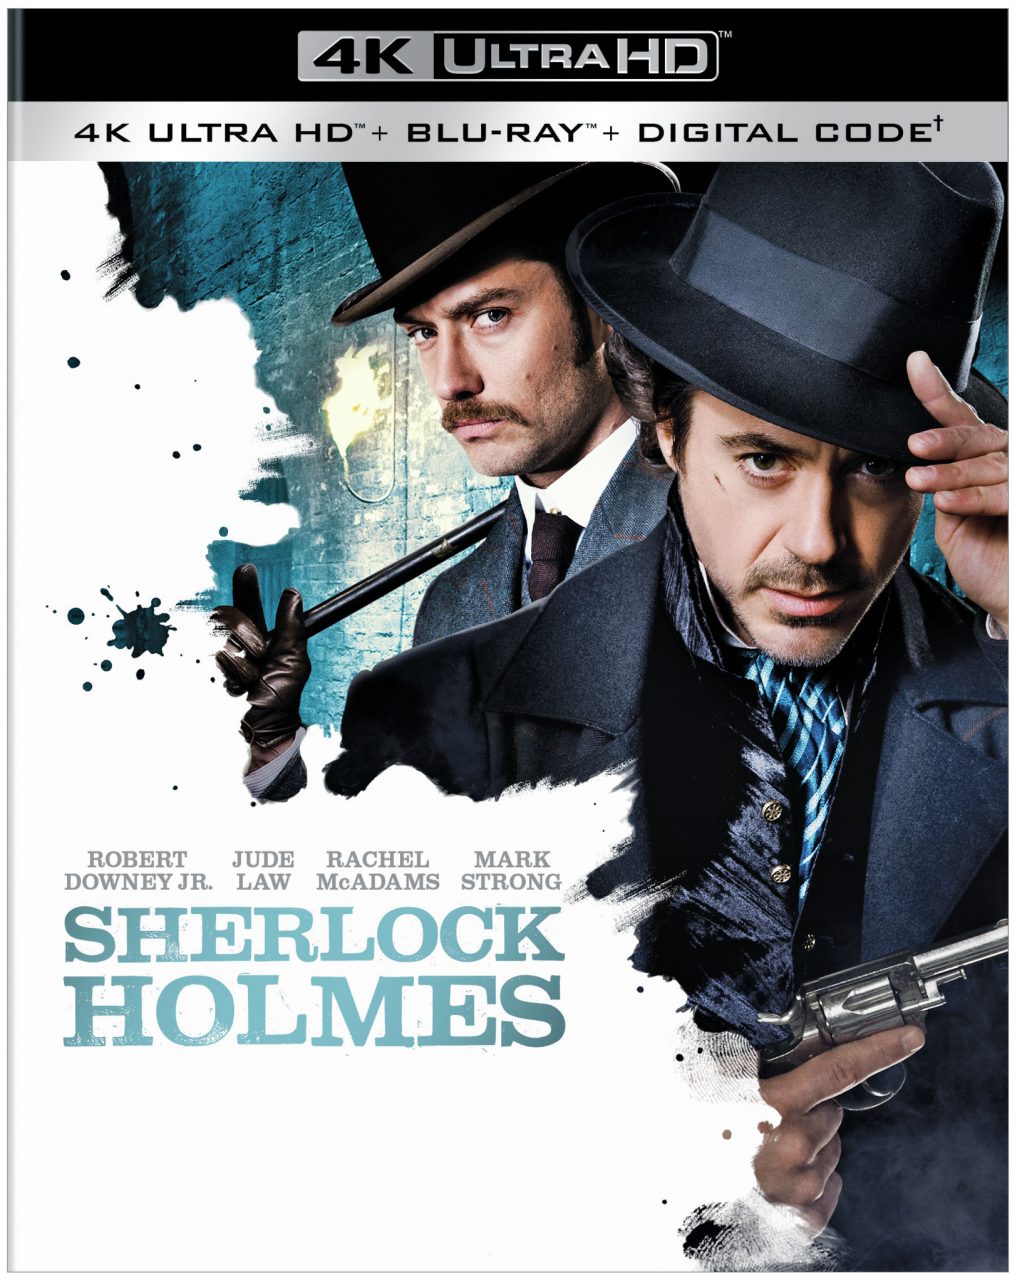 Sherlock Holmes 4K Ultra HD Combo Pack cover (Warner Bros. Home Entertainment)